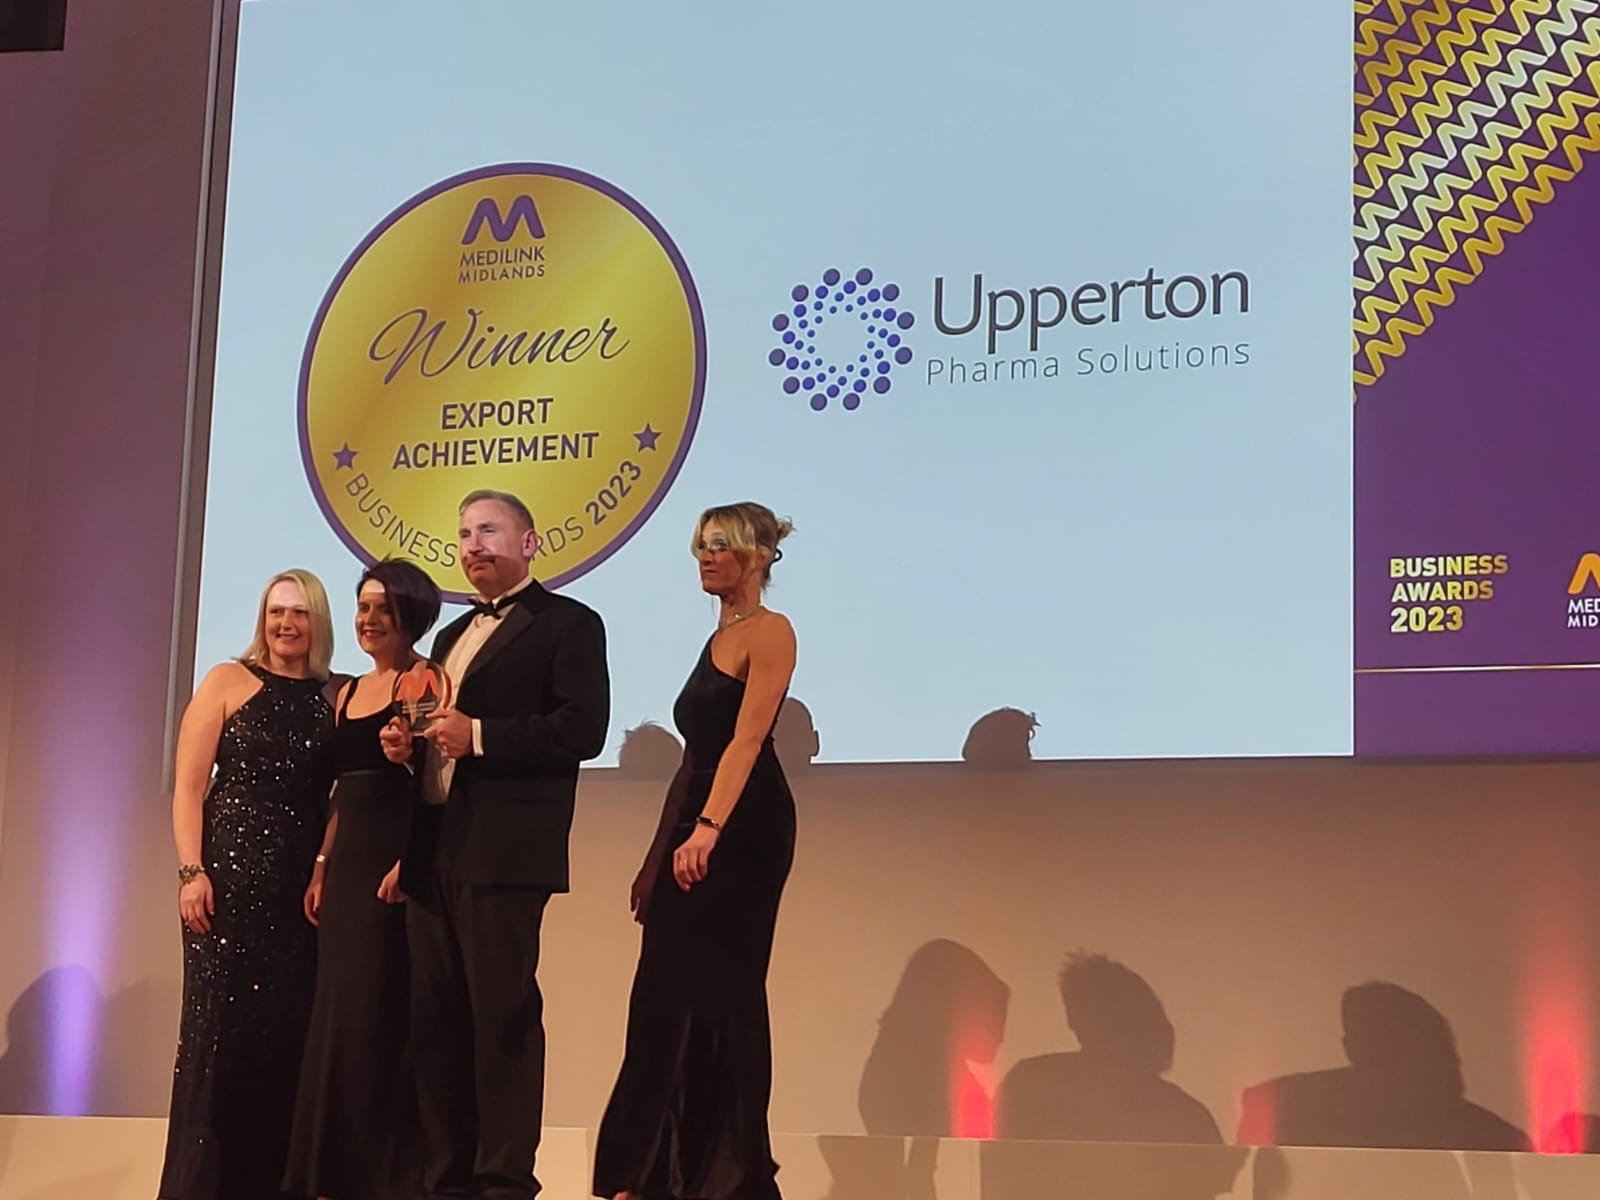 Upperton Pharma Solutions won an award for Export Achievement.